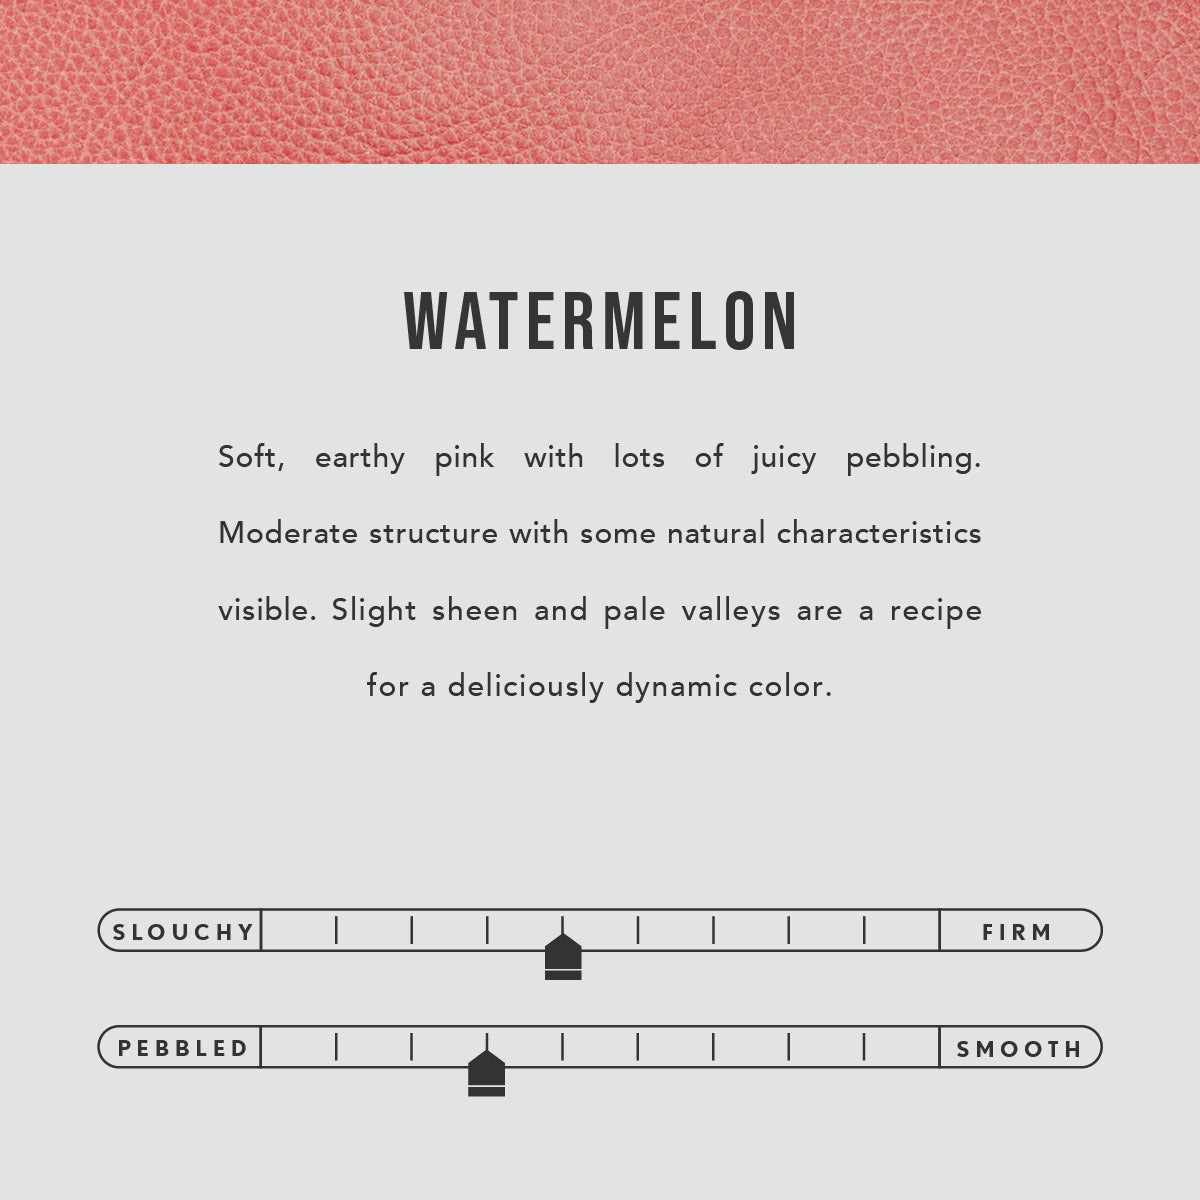 Watermelon | infographic